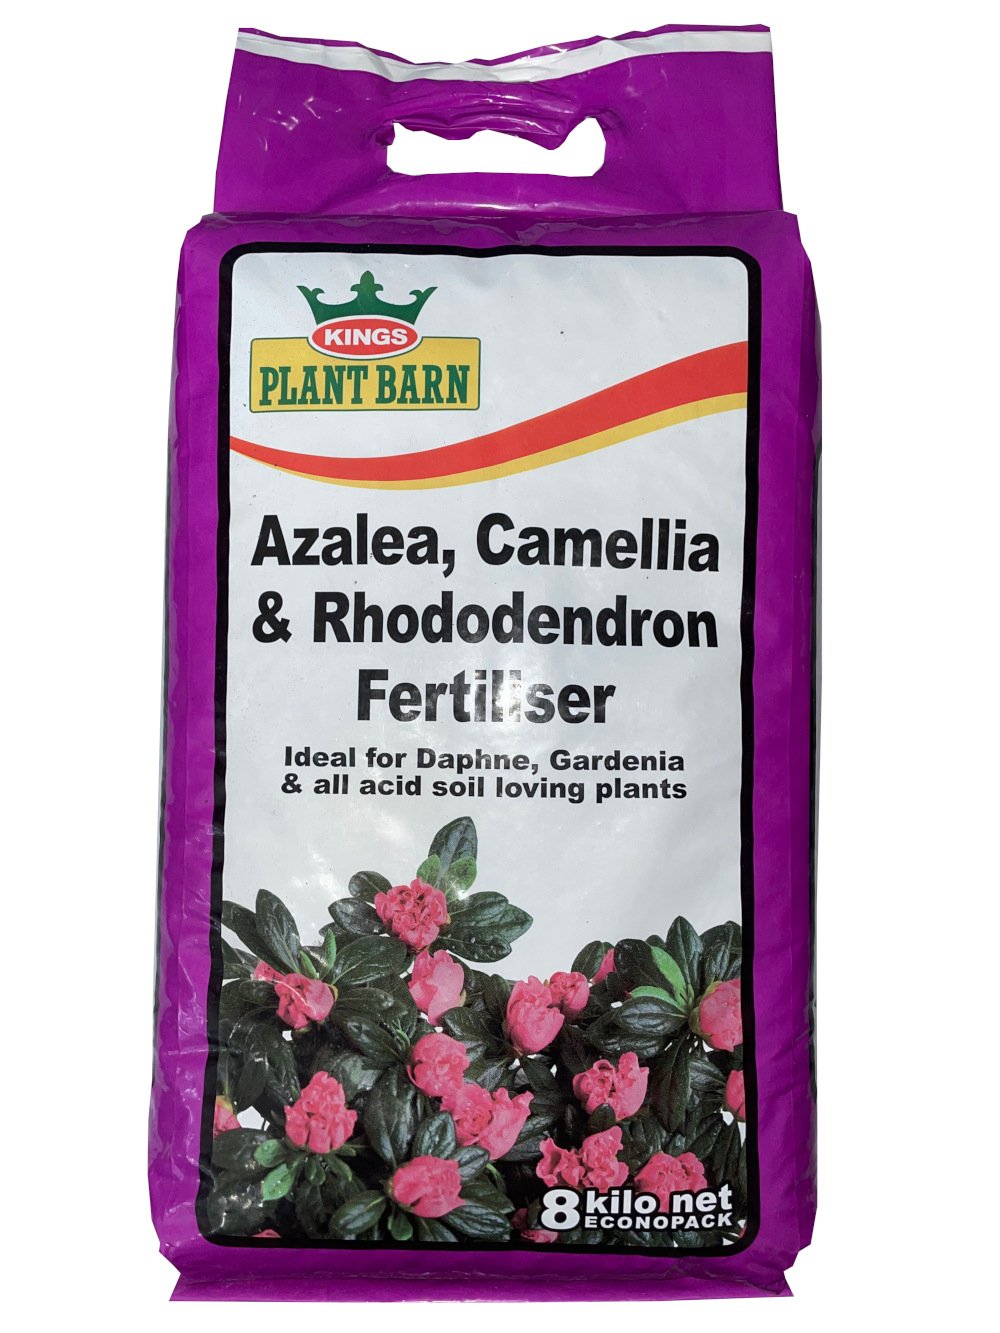 Kings Azalea, Camellia & Rhododendron Fertiliser 8kg